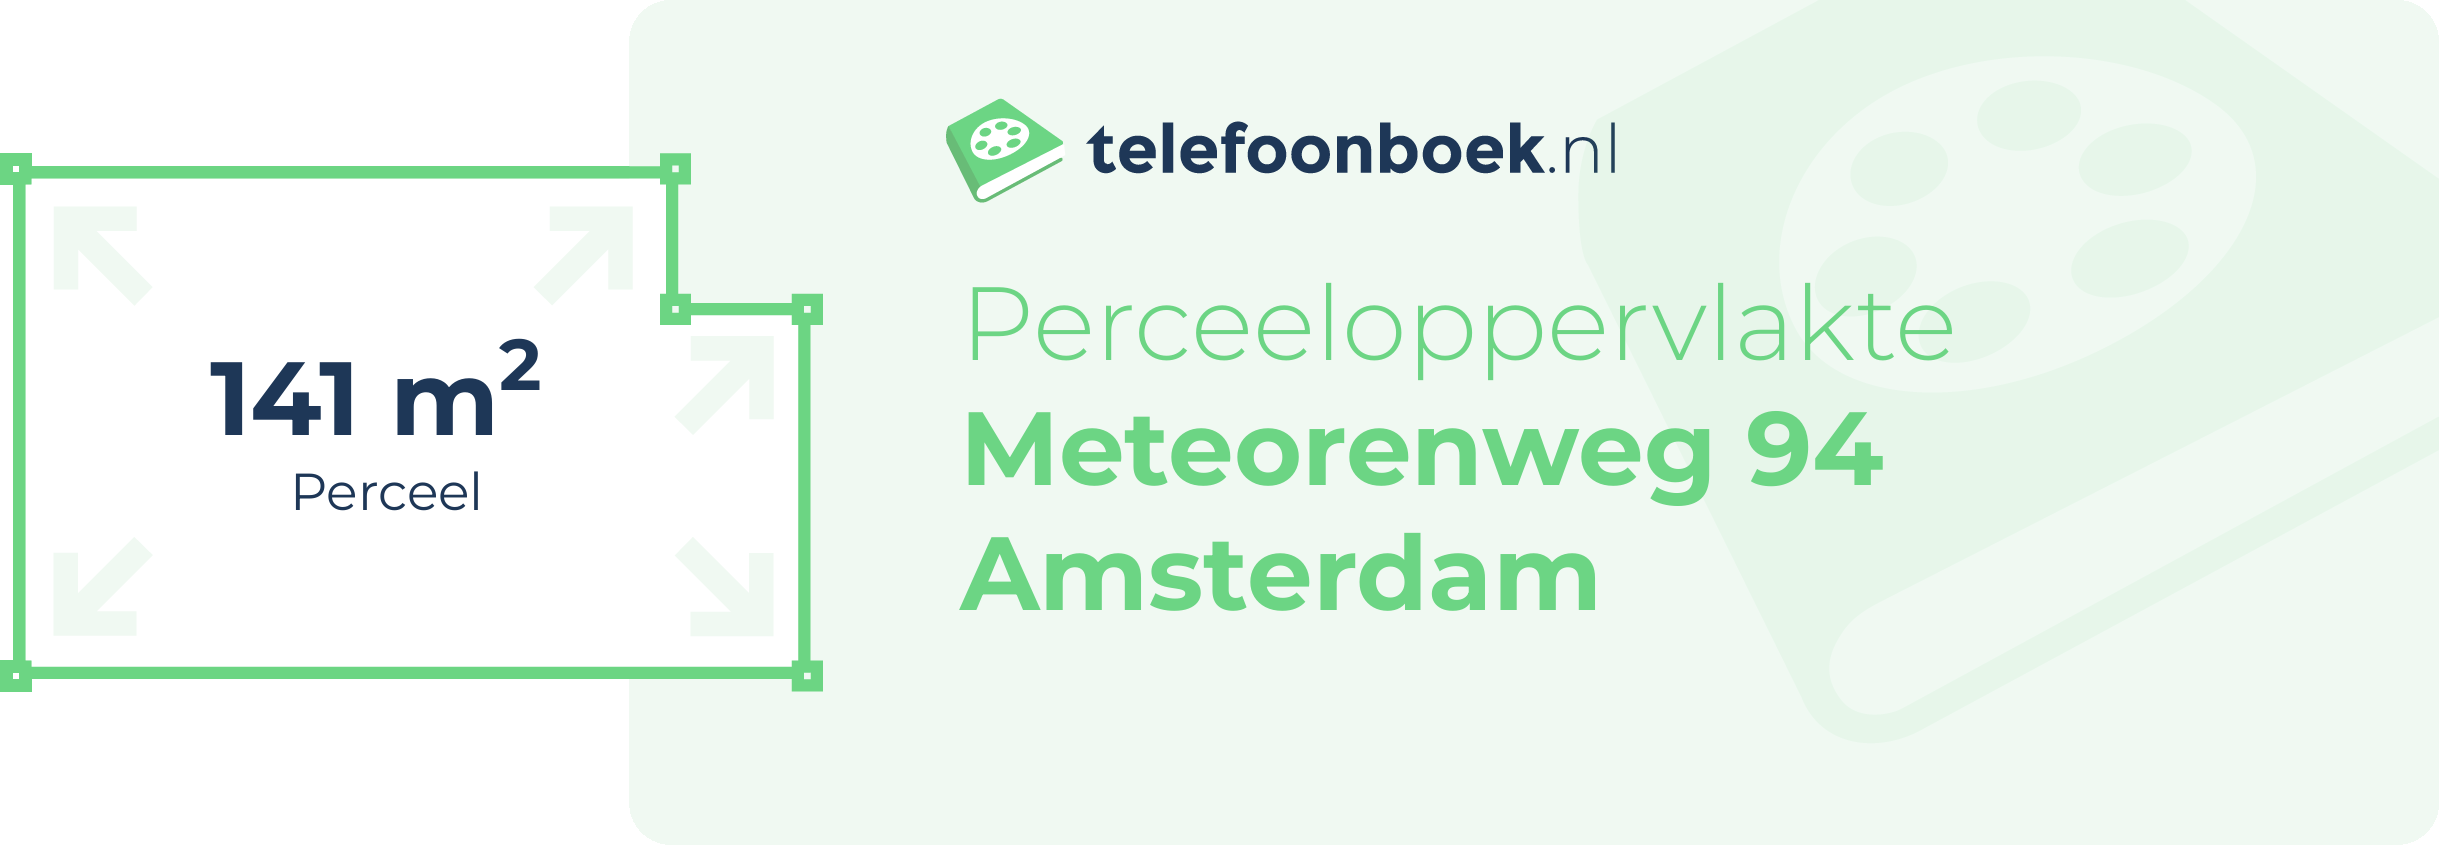 Perceeloppervlakte Meteorenweg 94 Amsterdam